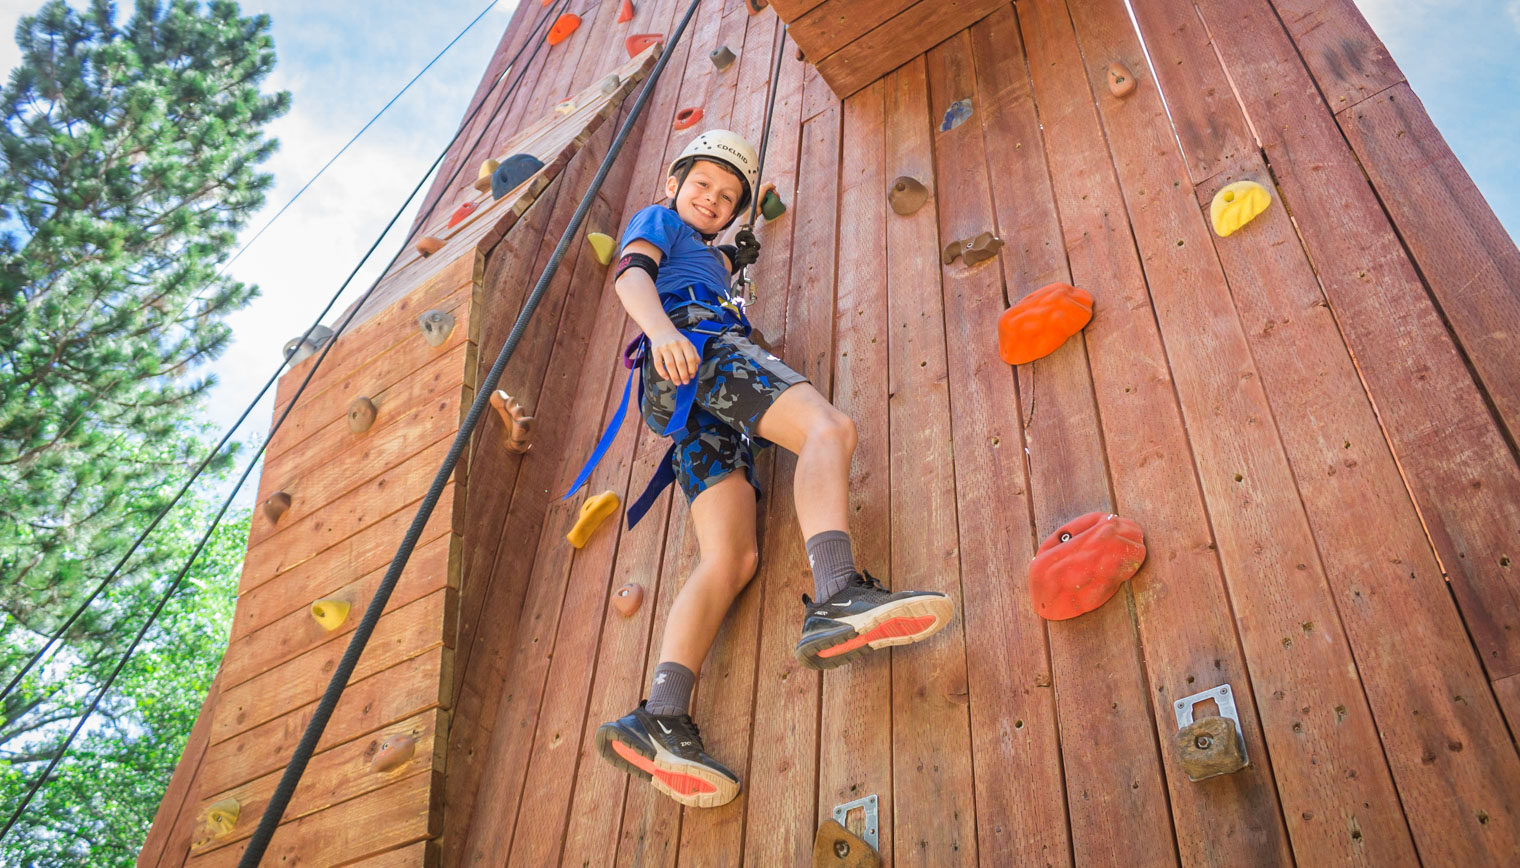 A boy smiling as he climbs a rockwall.